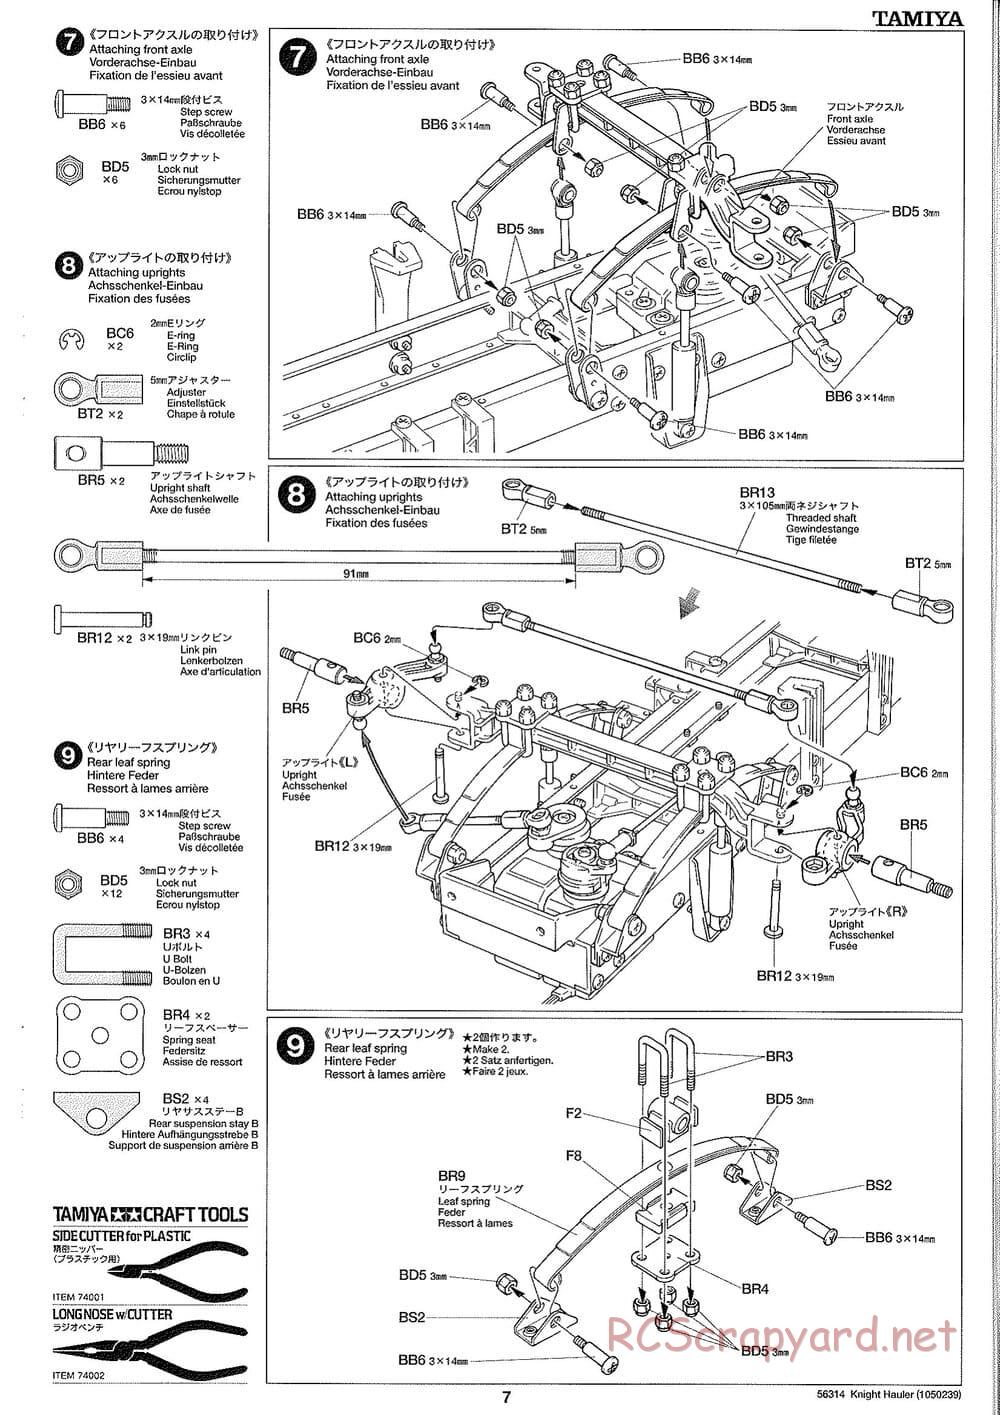 Tamiya - Knight Hauler Tractor Truck Chassis - Manual - Page 7